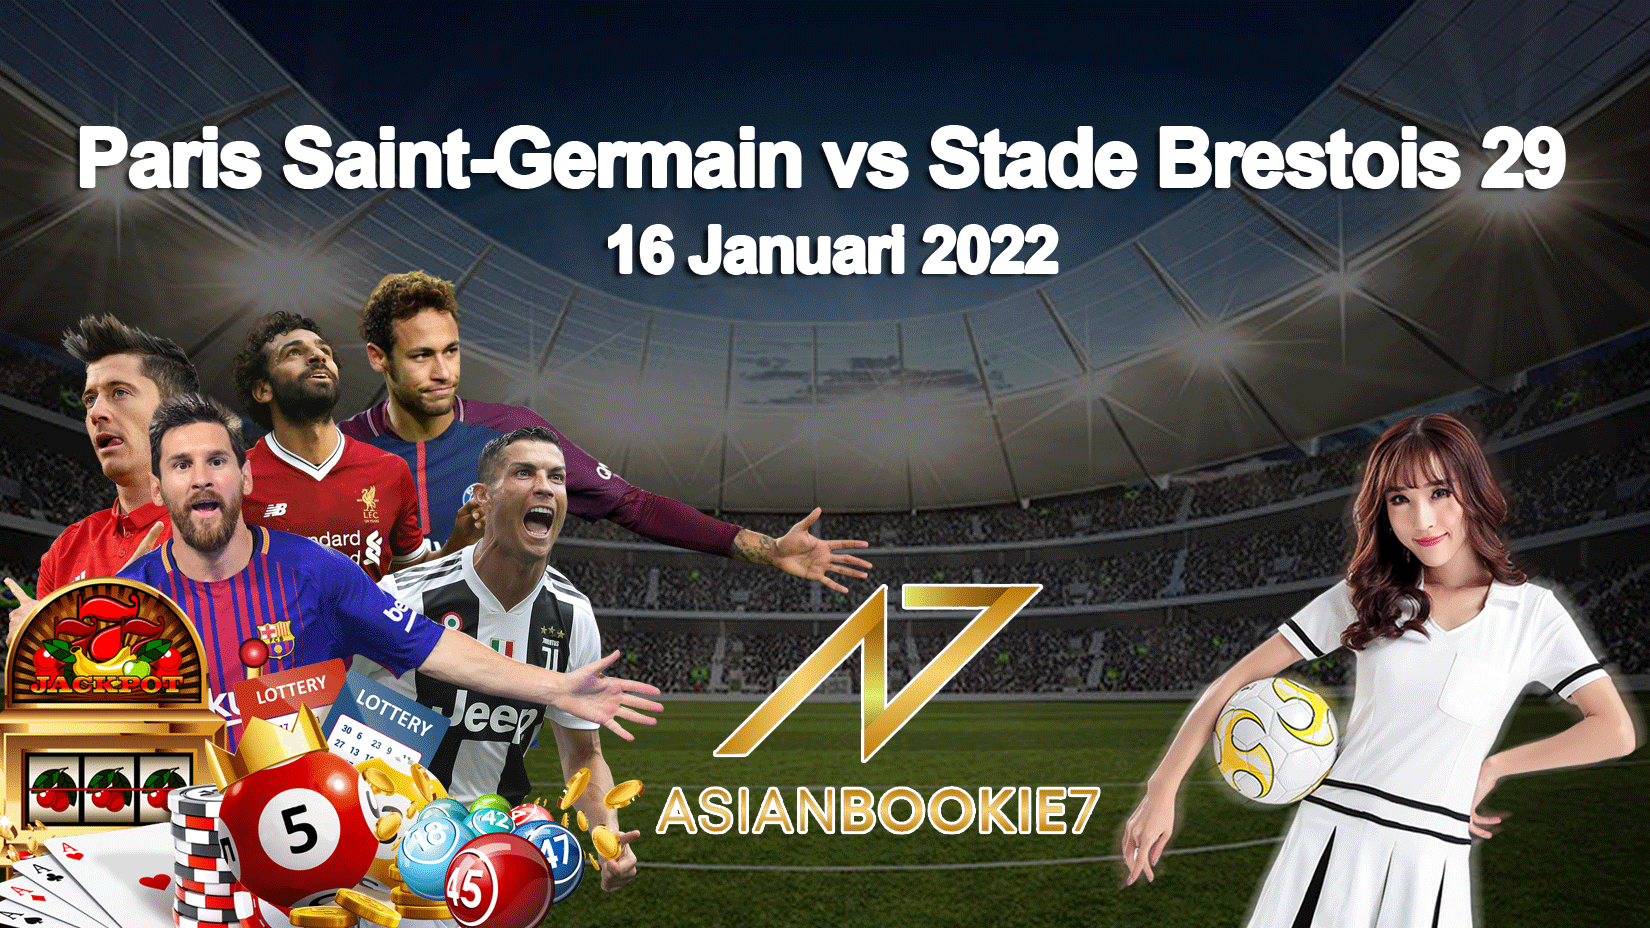 Prediksi Paris Saint-Germain vs Stade Brestois 29 16 Januari 2022